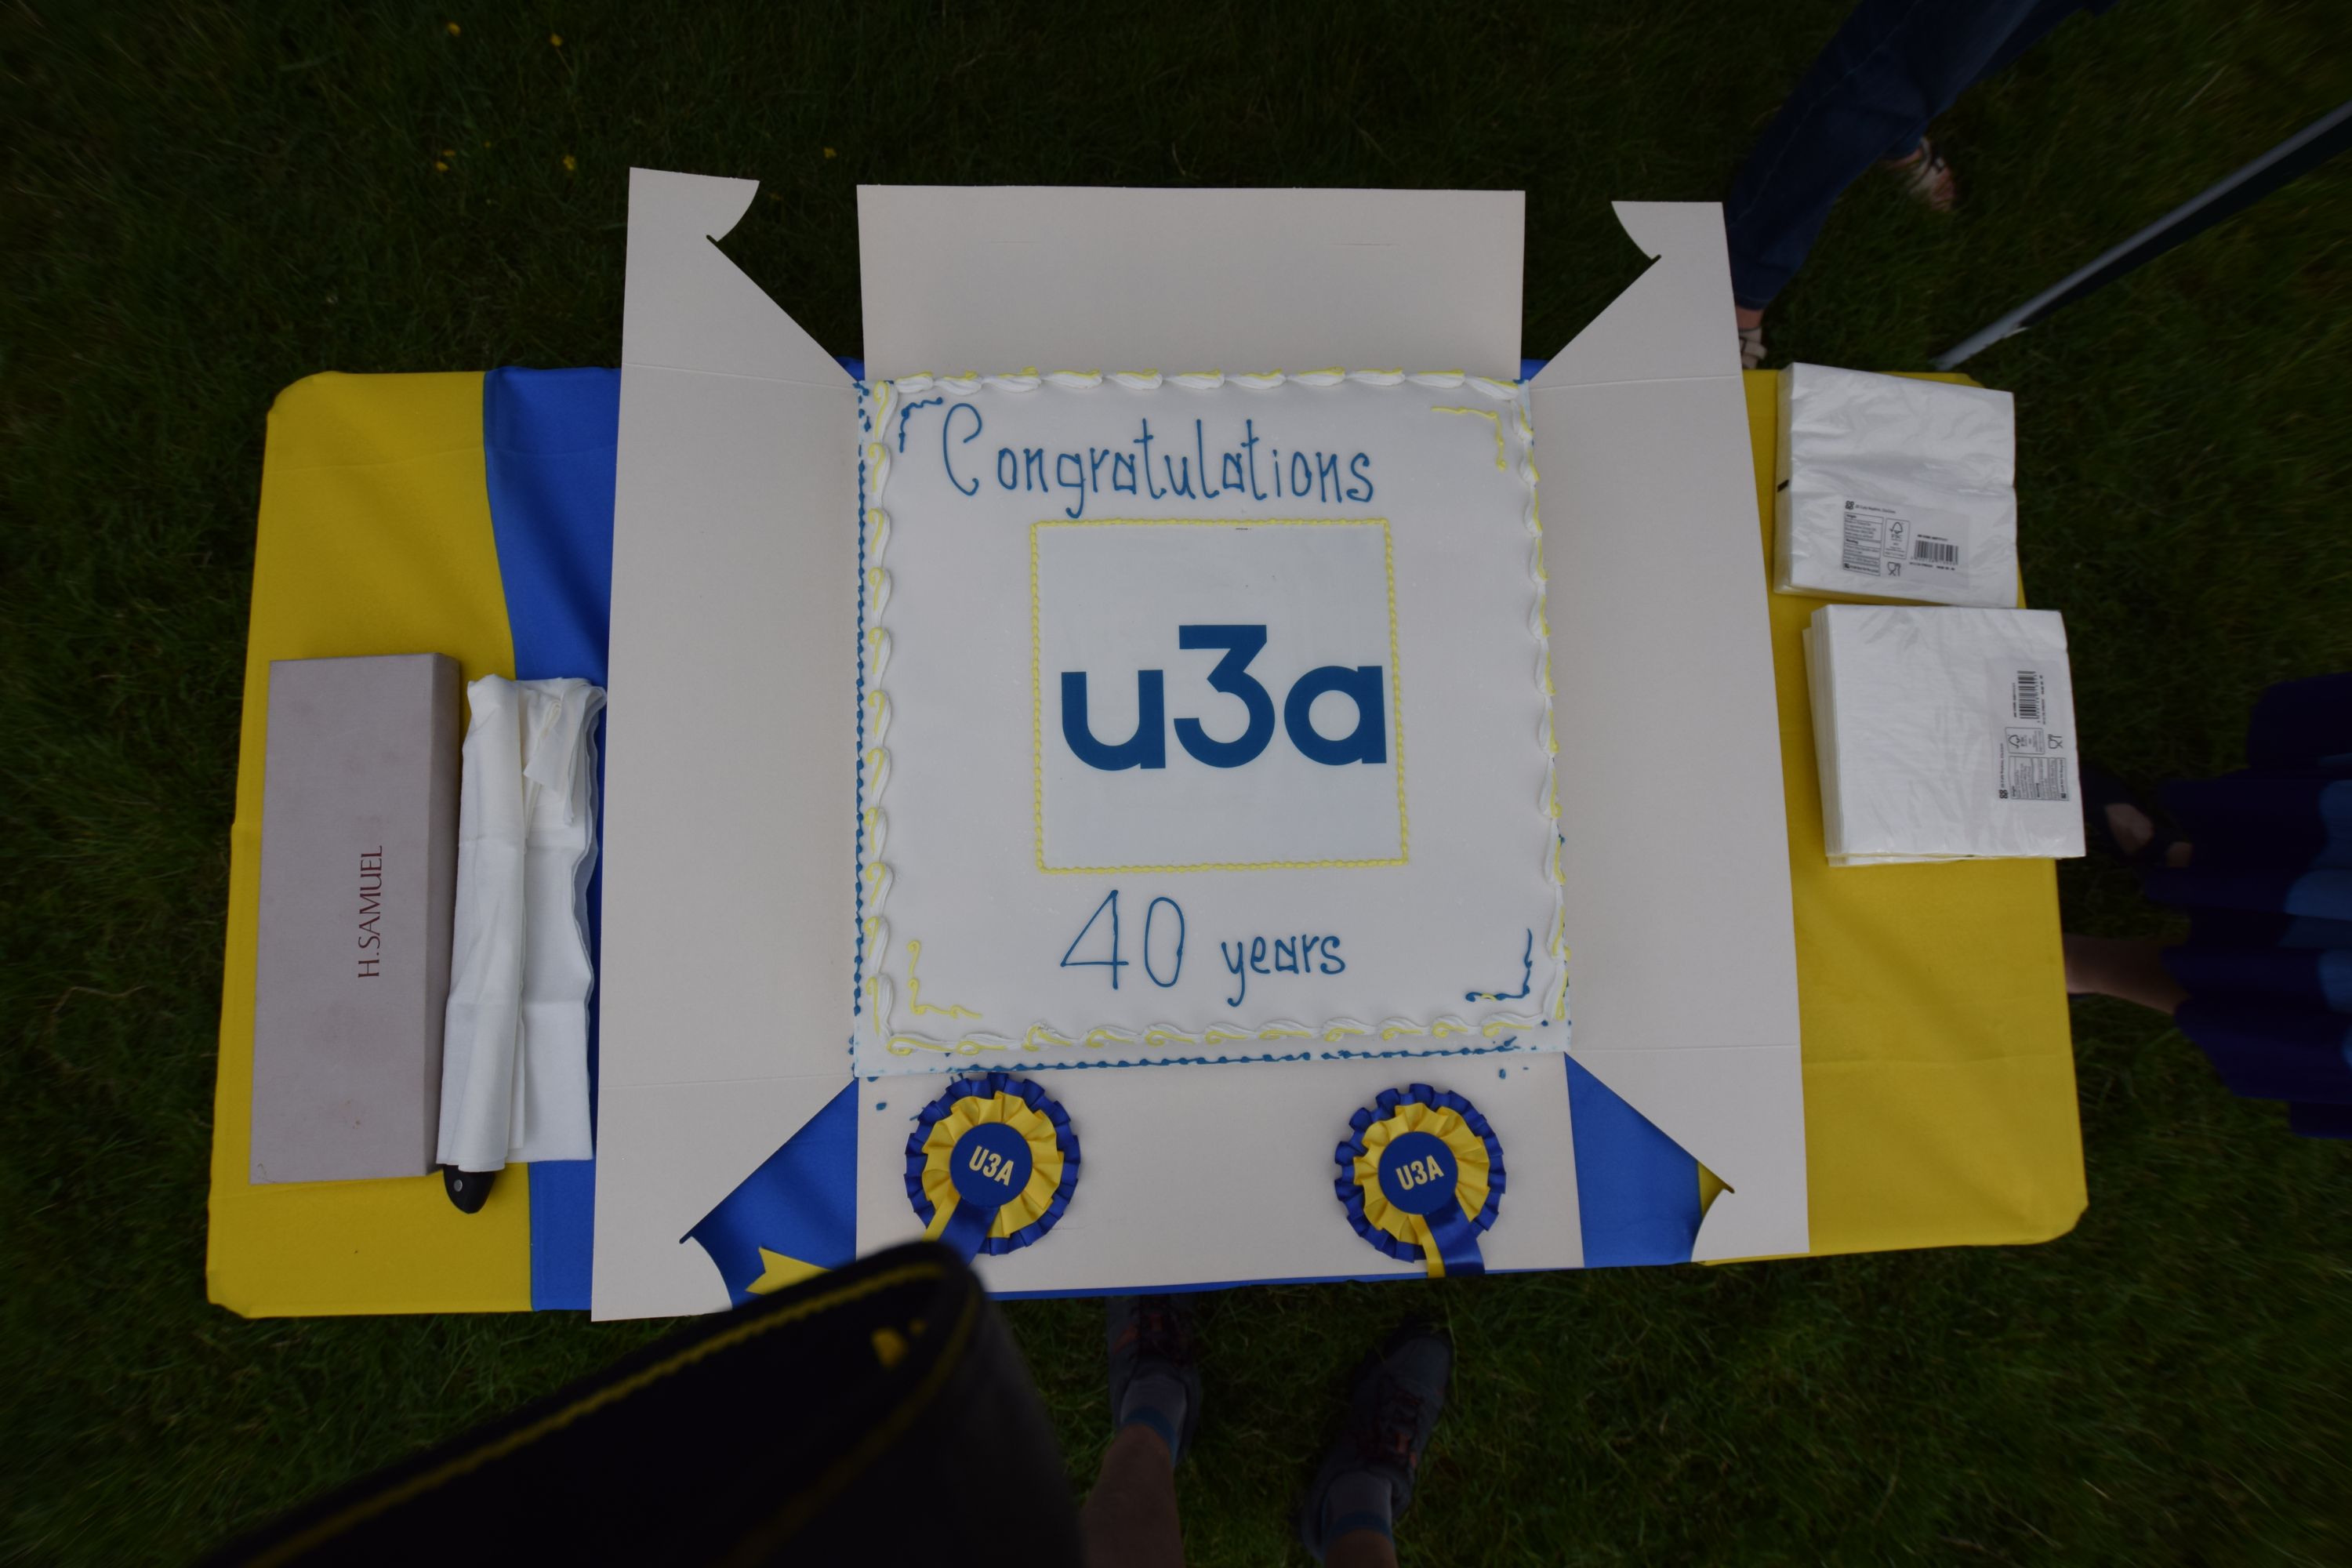 40th celebration cake